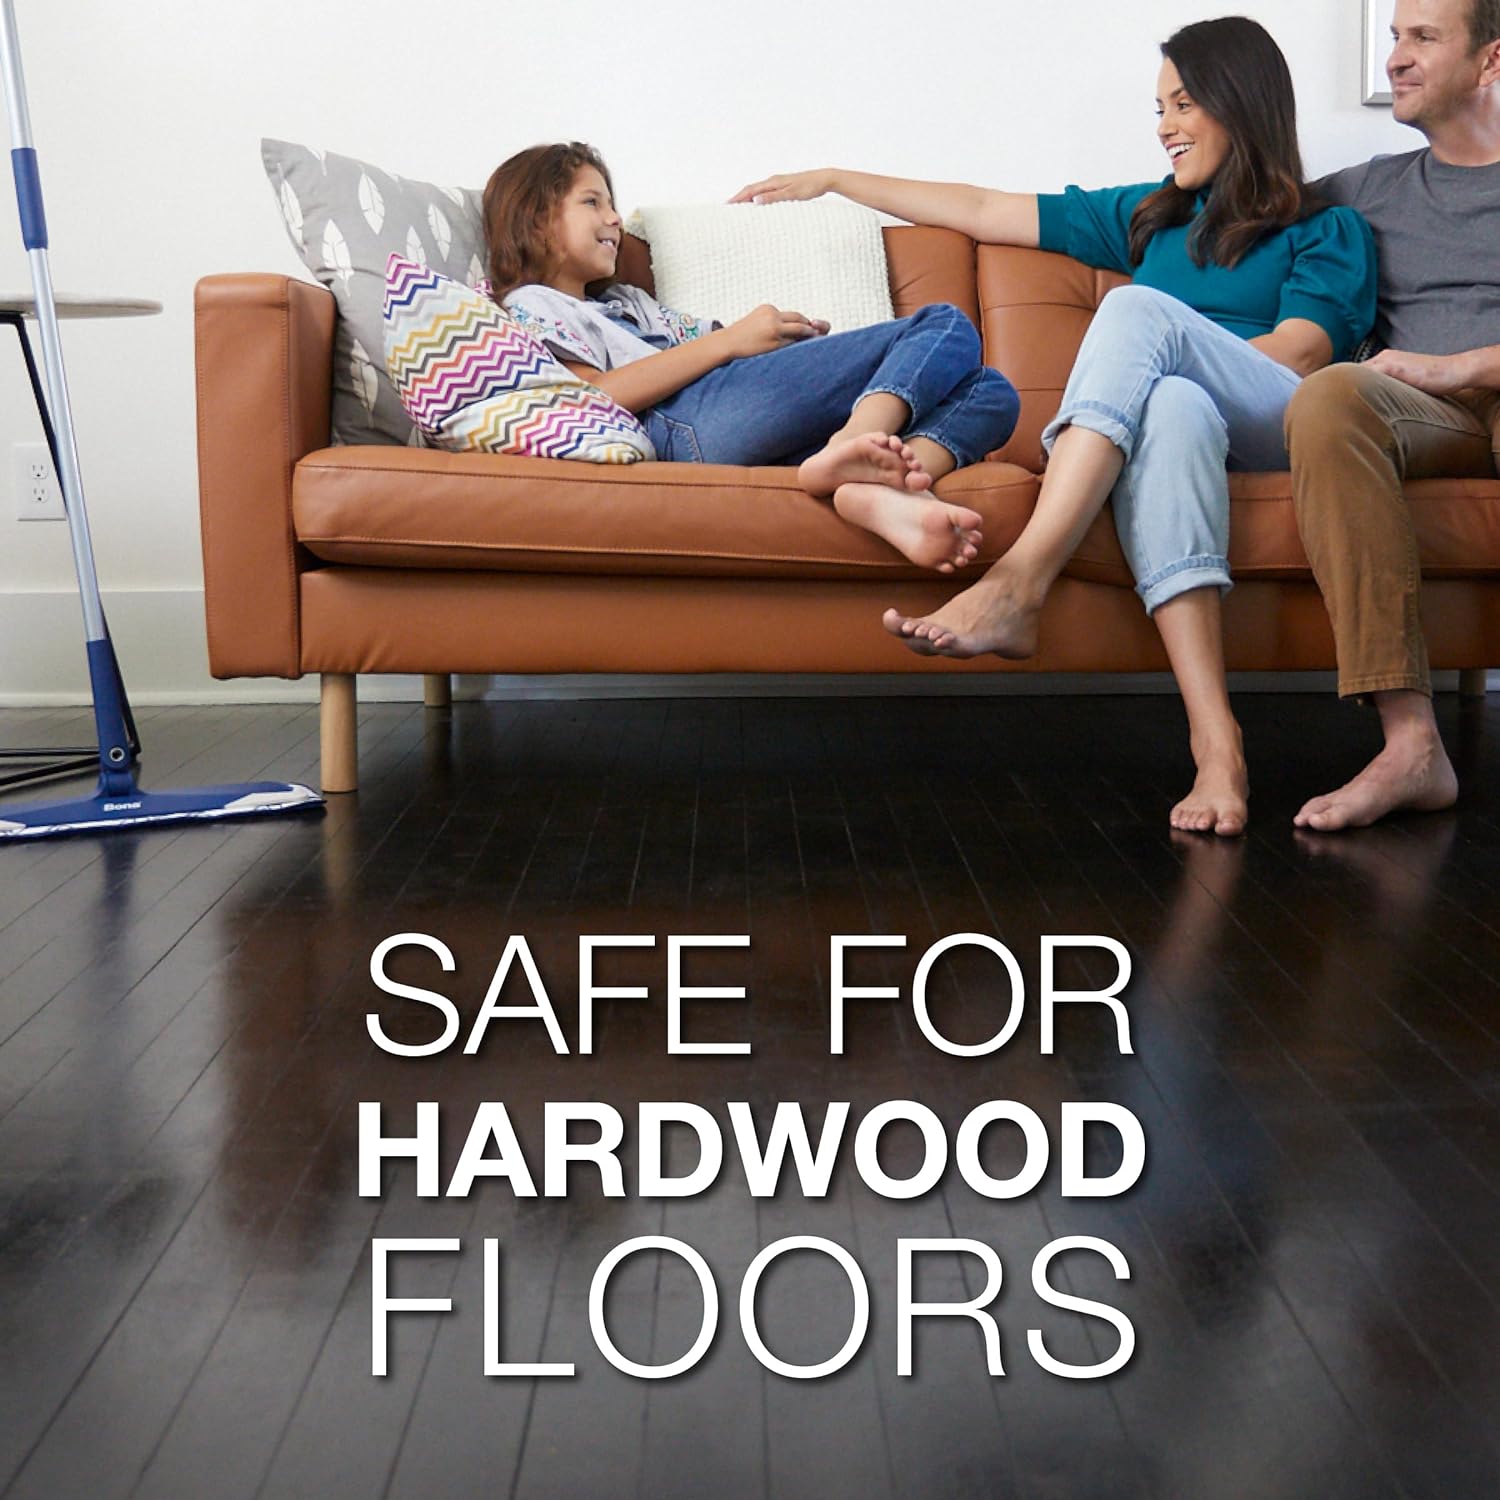 Bona Hardwood Floor Polish - 32 fl oz - High Gloss Shine - 32 oz covers 500sq ft of flooring - for use on Wood Floors : Health & Household